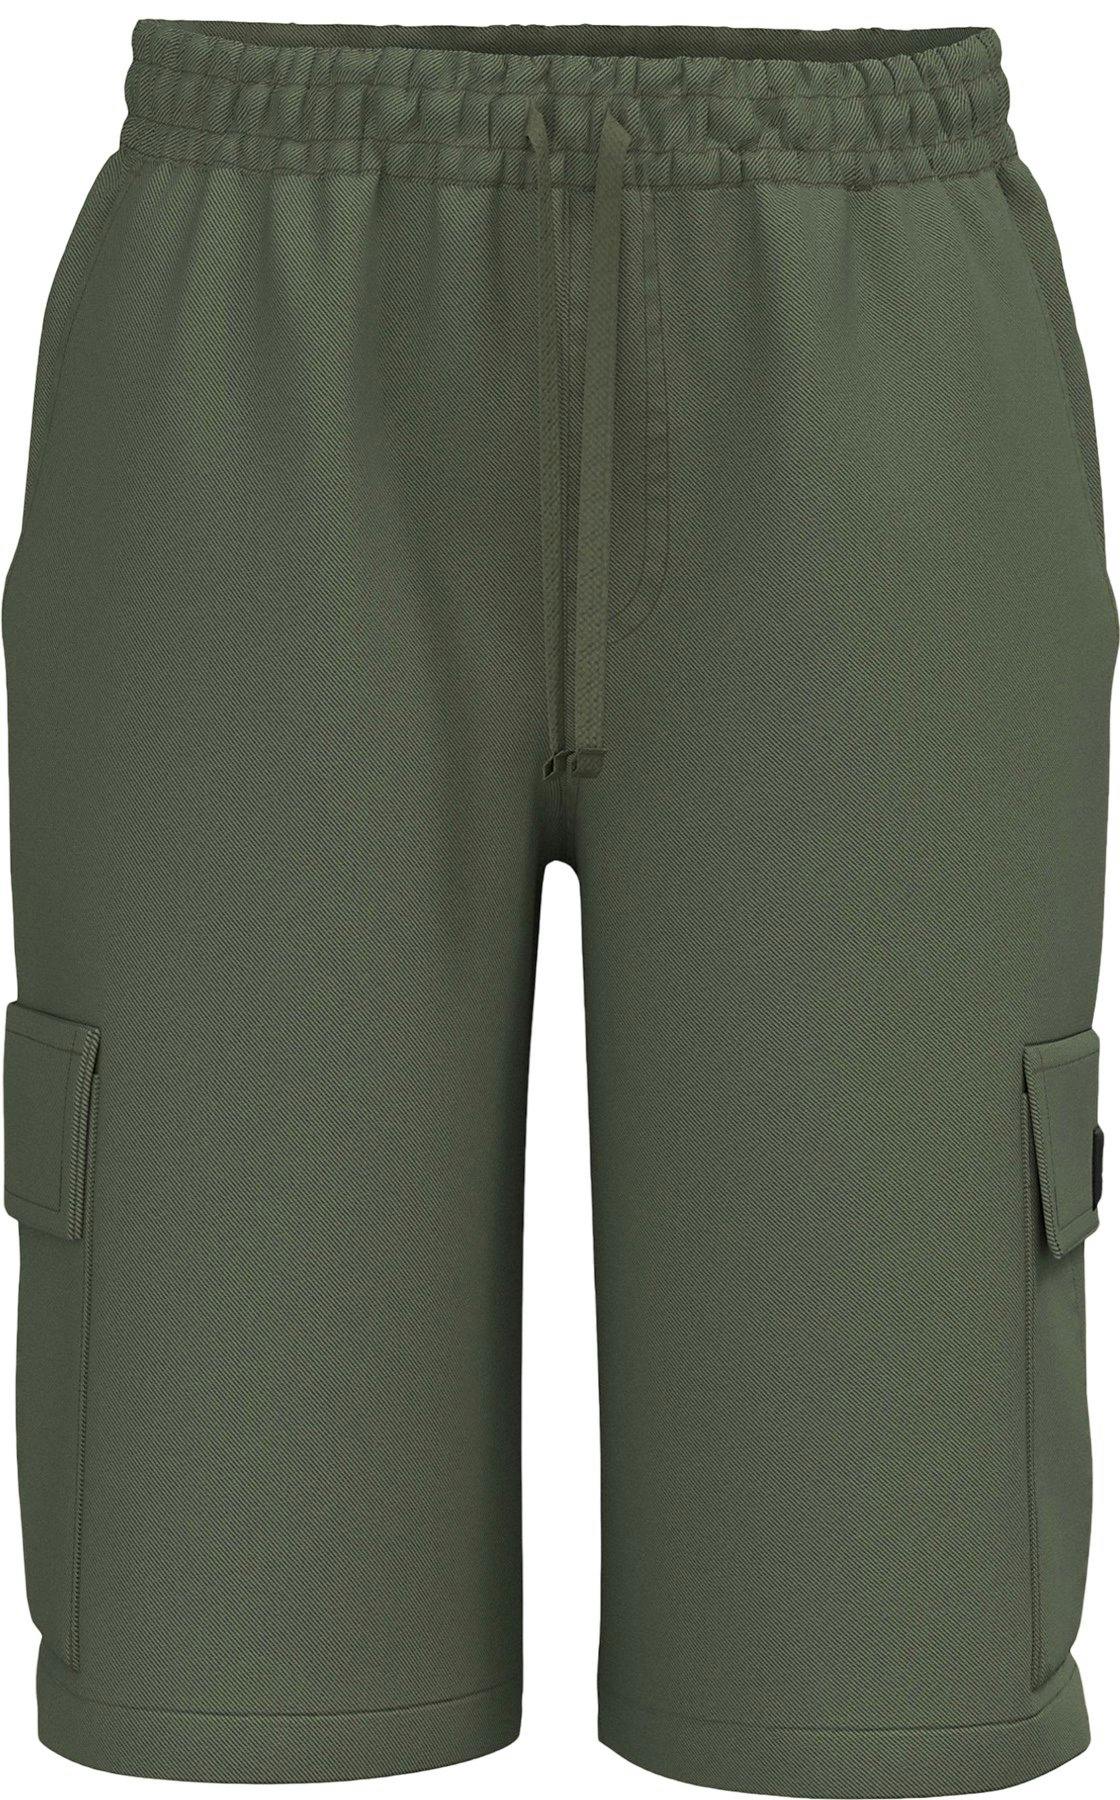 Product image for Range Elastic Waist Cargo Shorts 18 In - Boys